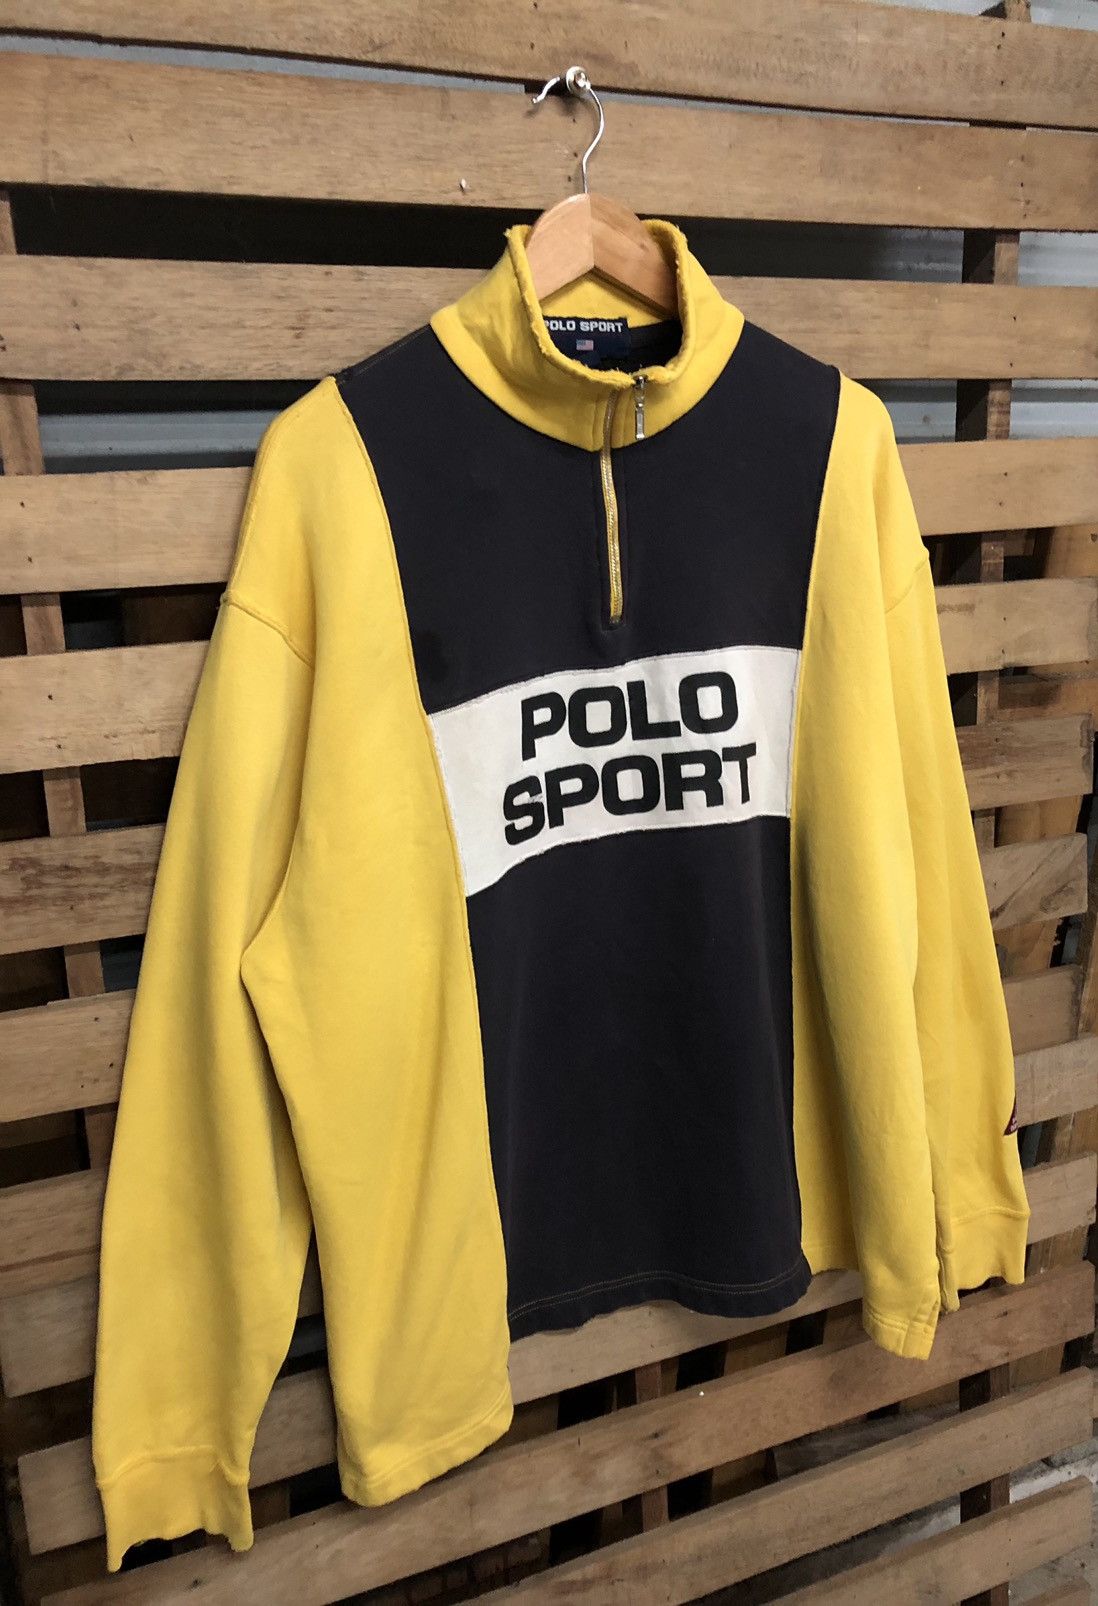 Polo Ralph Lauren - Rare Vintage 90s Polo Sport Spellout Half Zipper Sweetshirt - 4